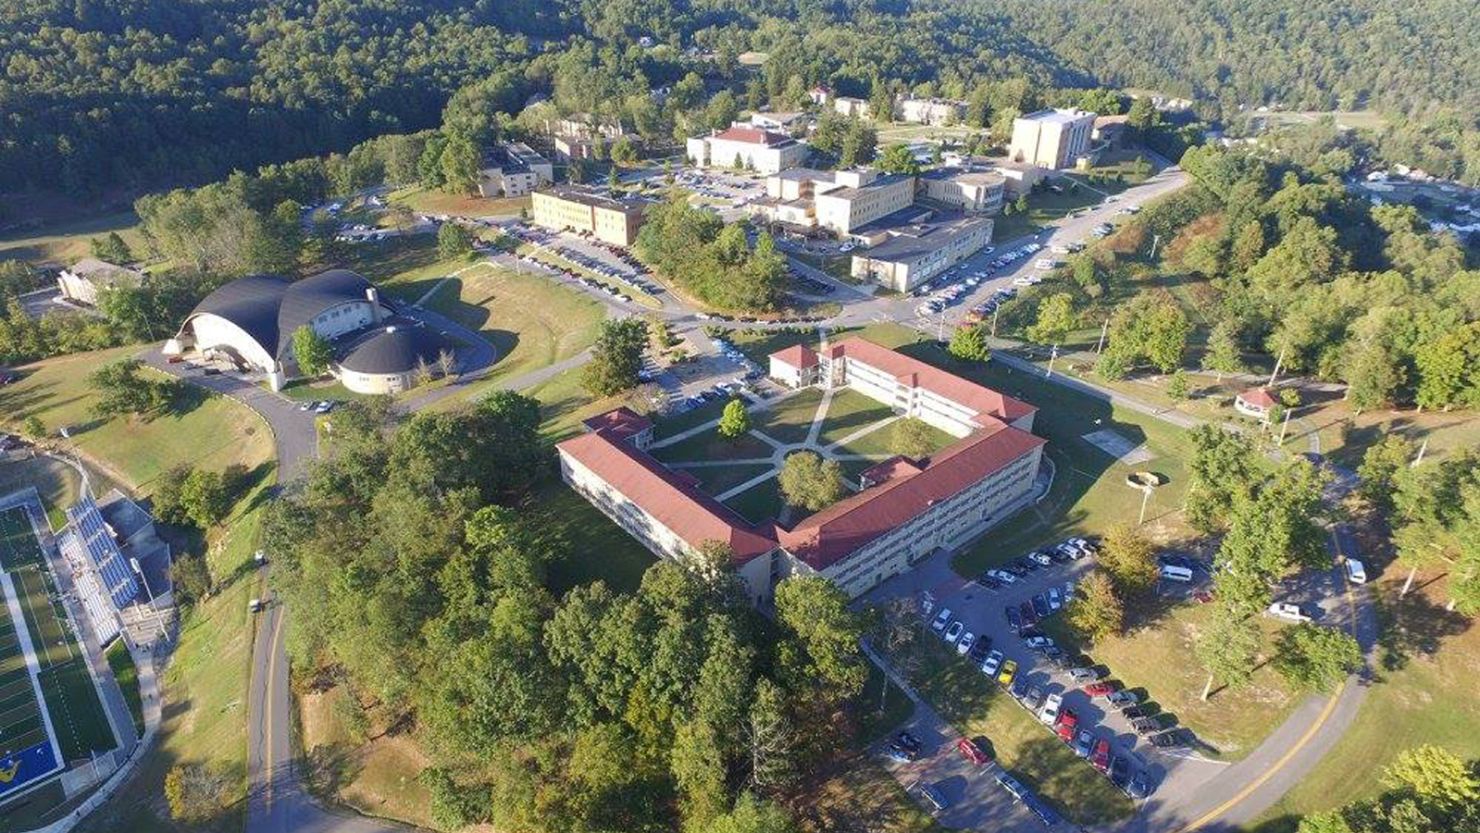 Alderson Broaddus University's trustees voted Monday to close the school.